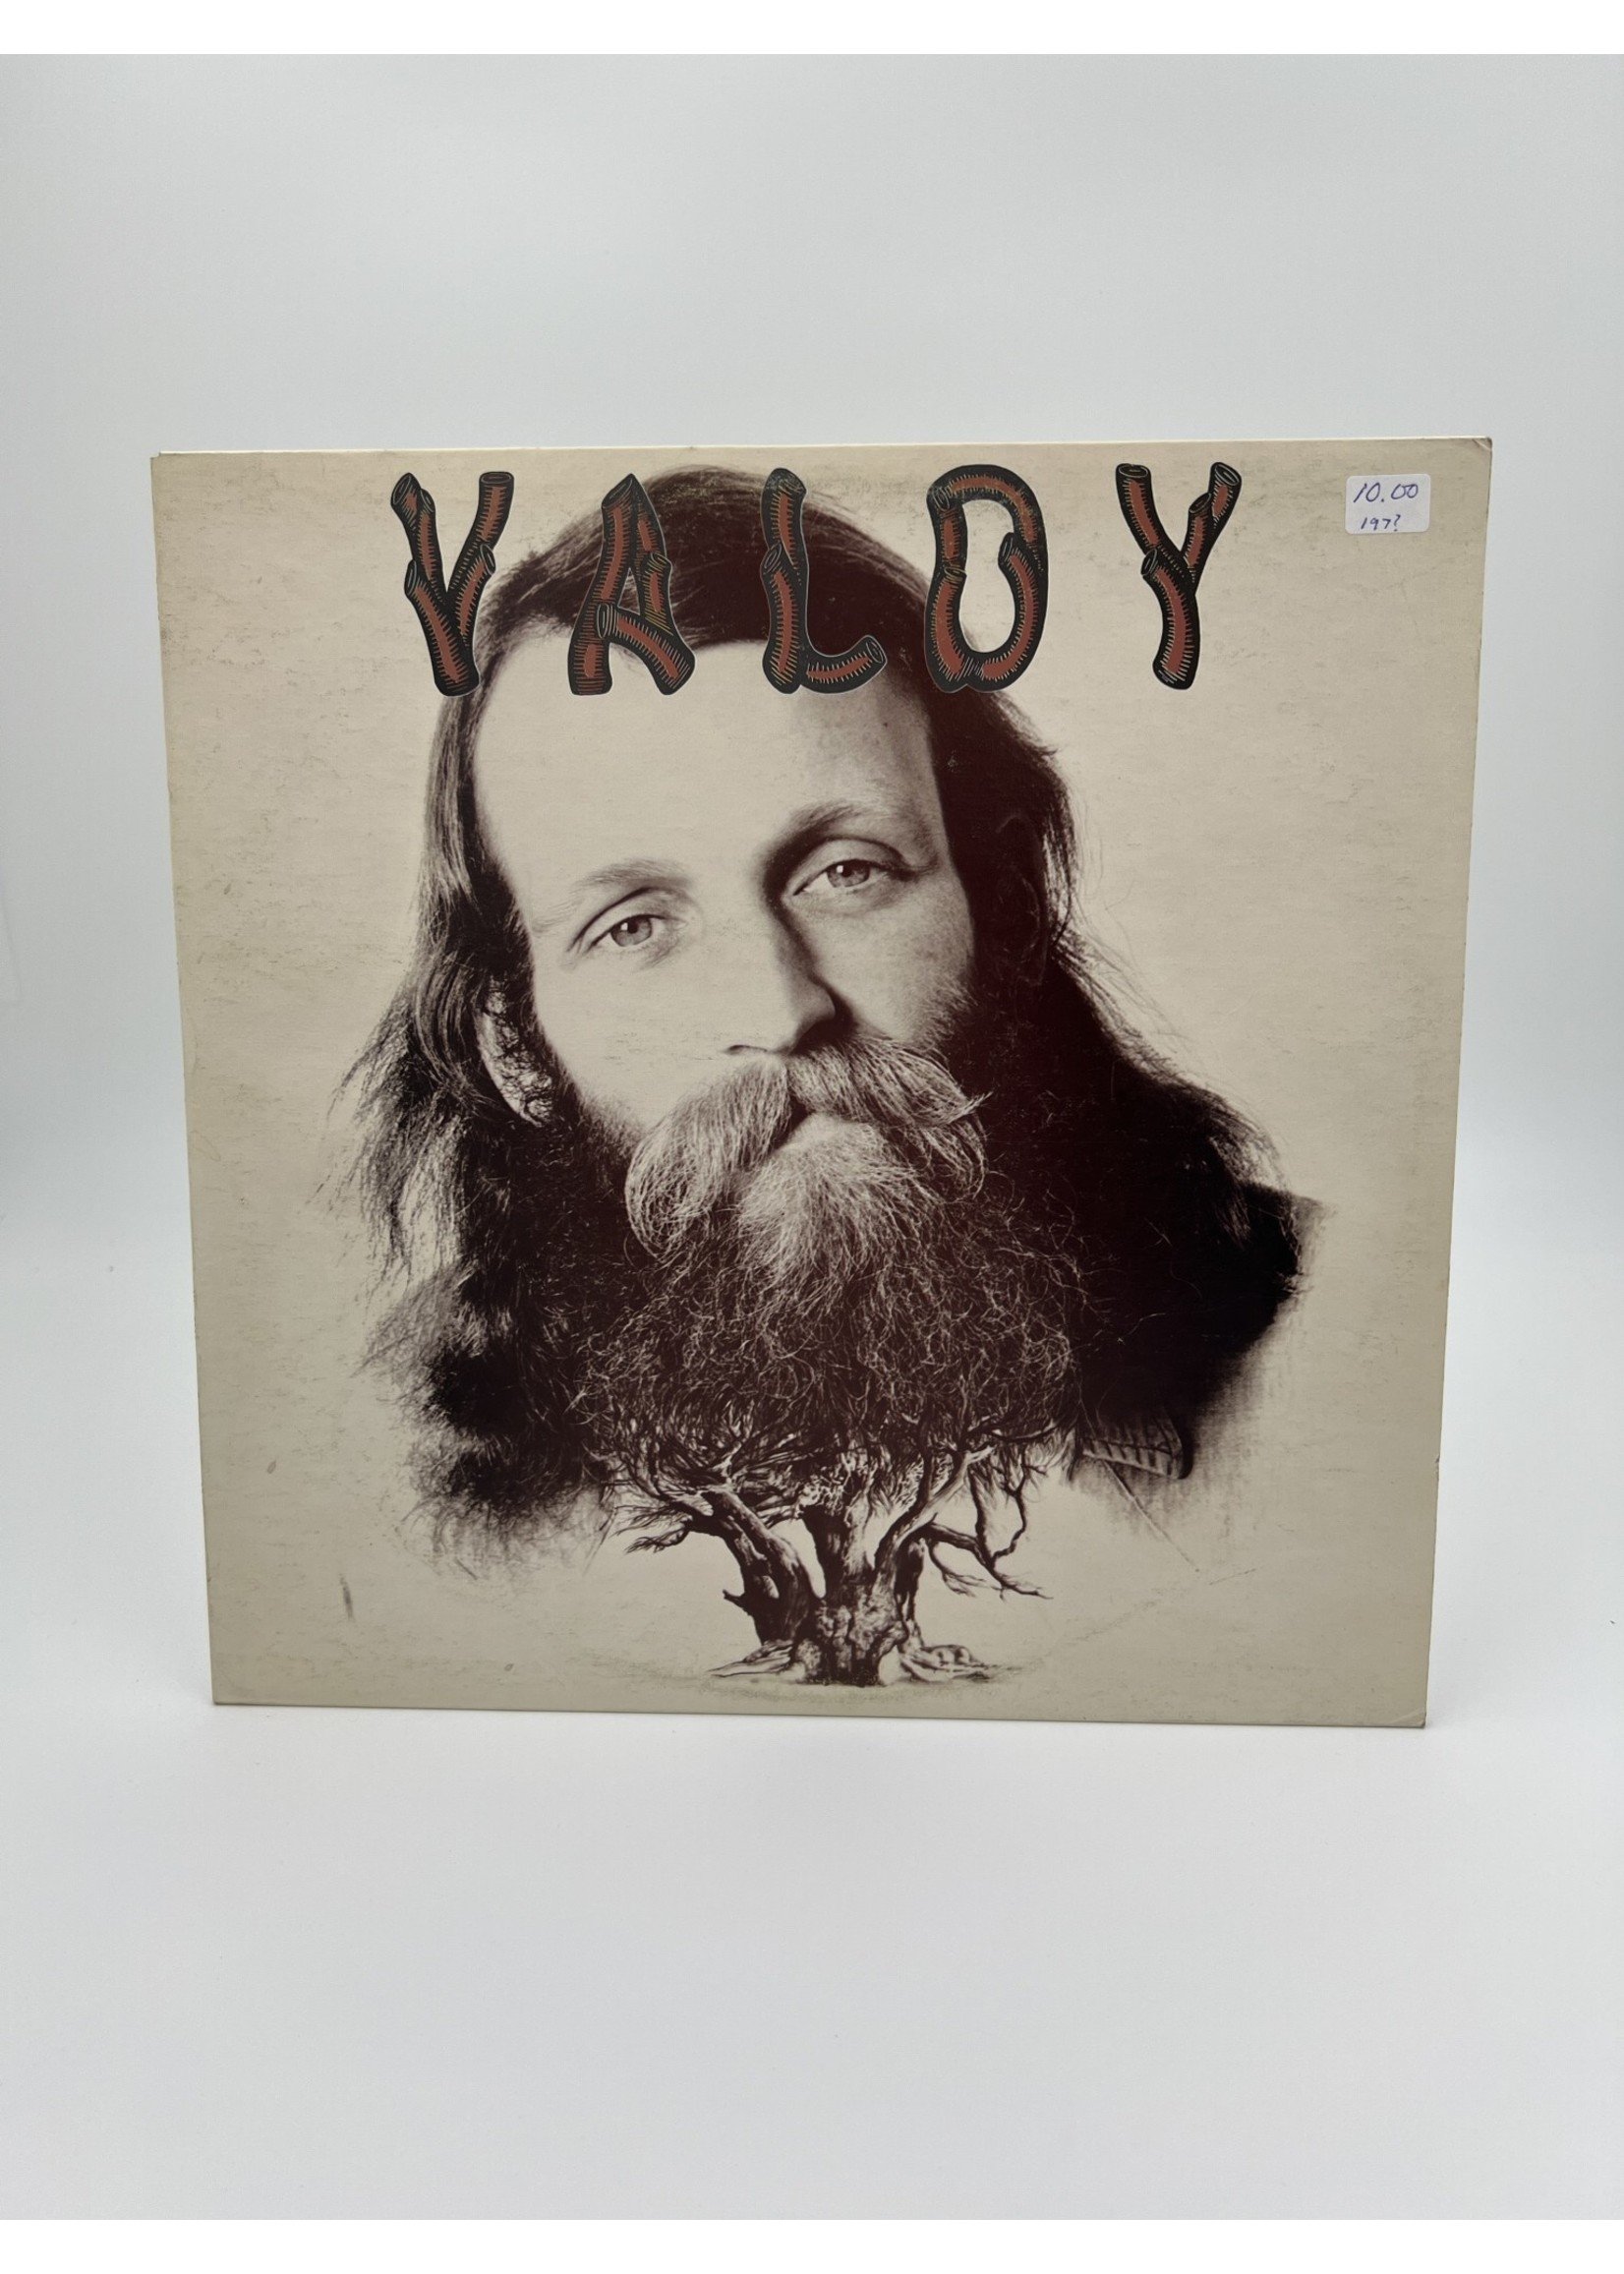 LP Valdy Country Man LP RECORD